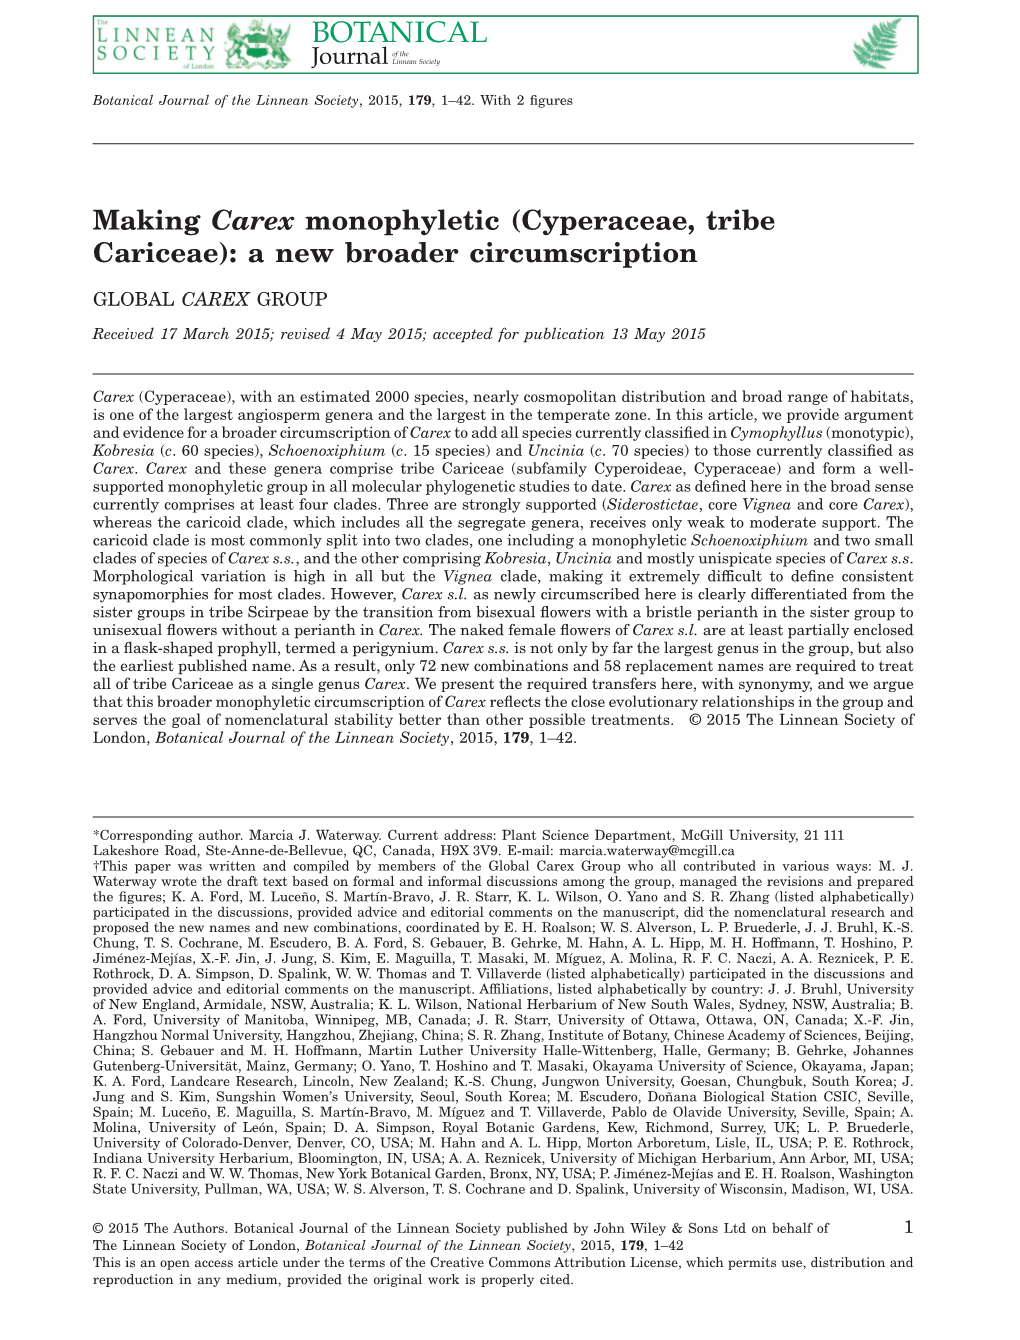 Cyperaceae, Tribe Cariceae): a New Broader Circumscription